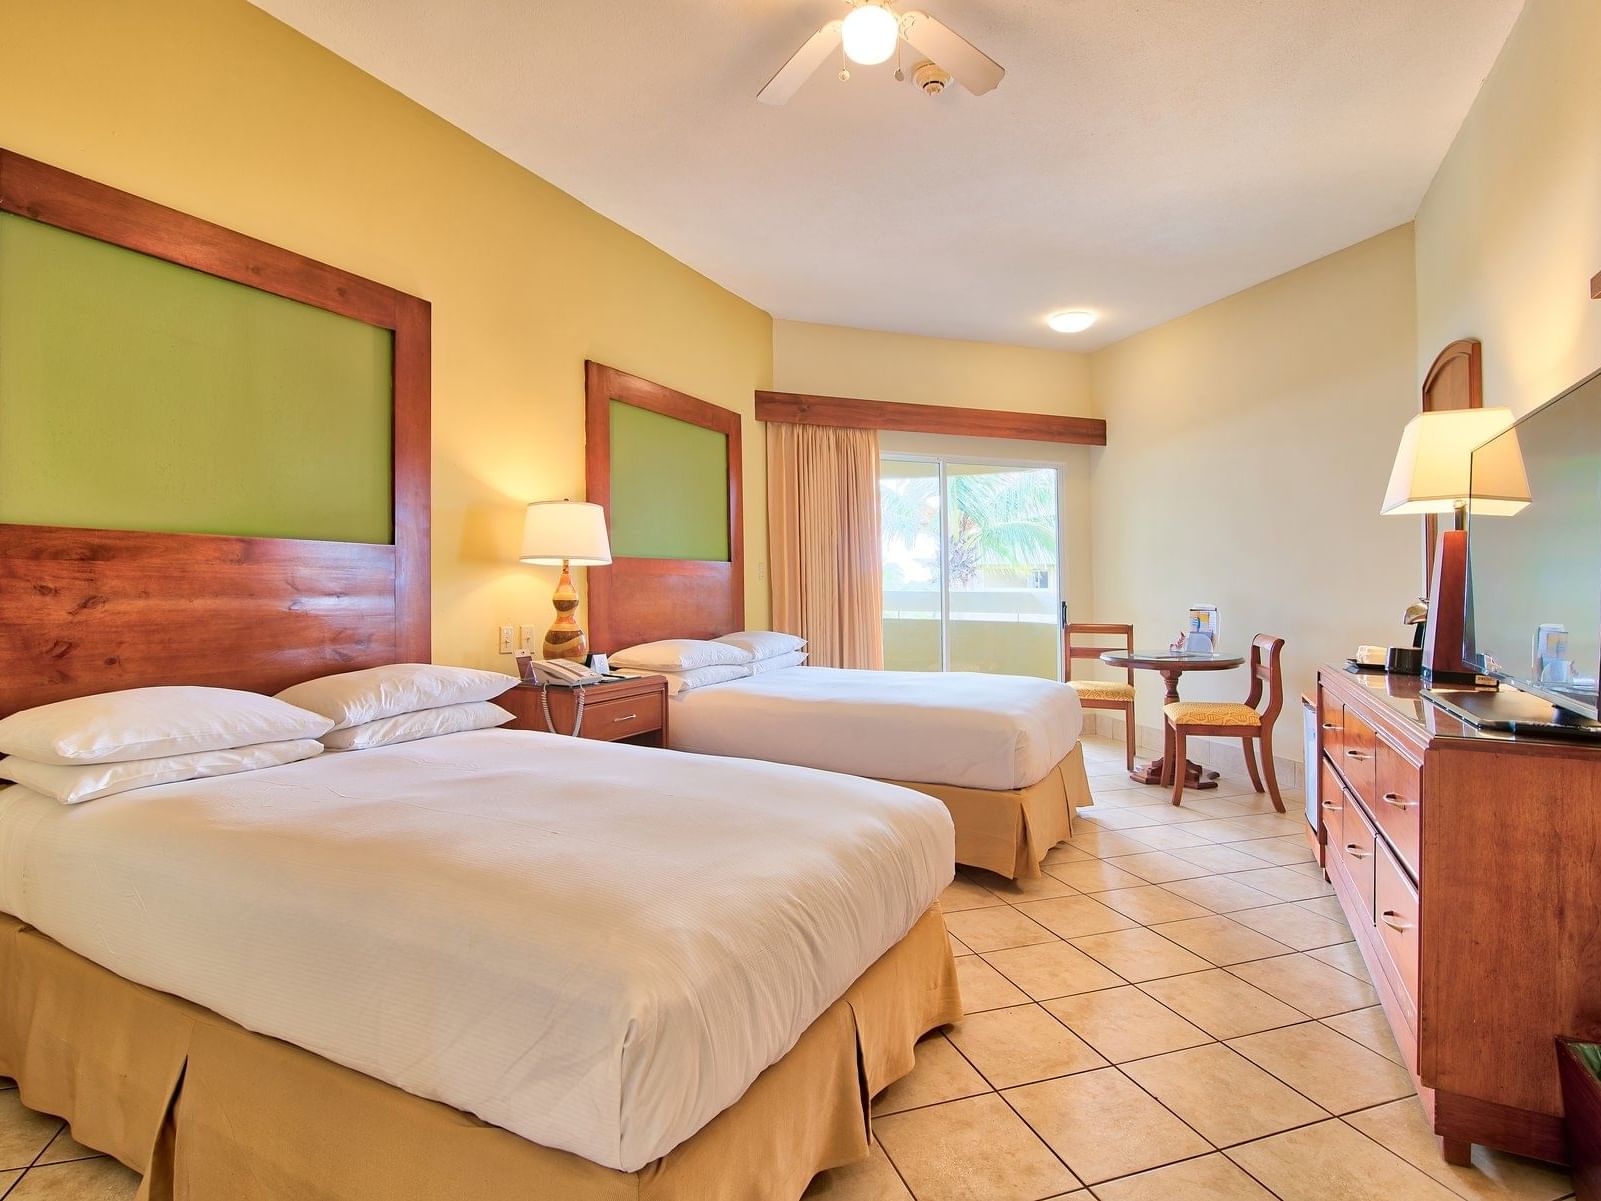 Beds in Royal ocean view 2 Double Room at Fiesta Resort